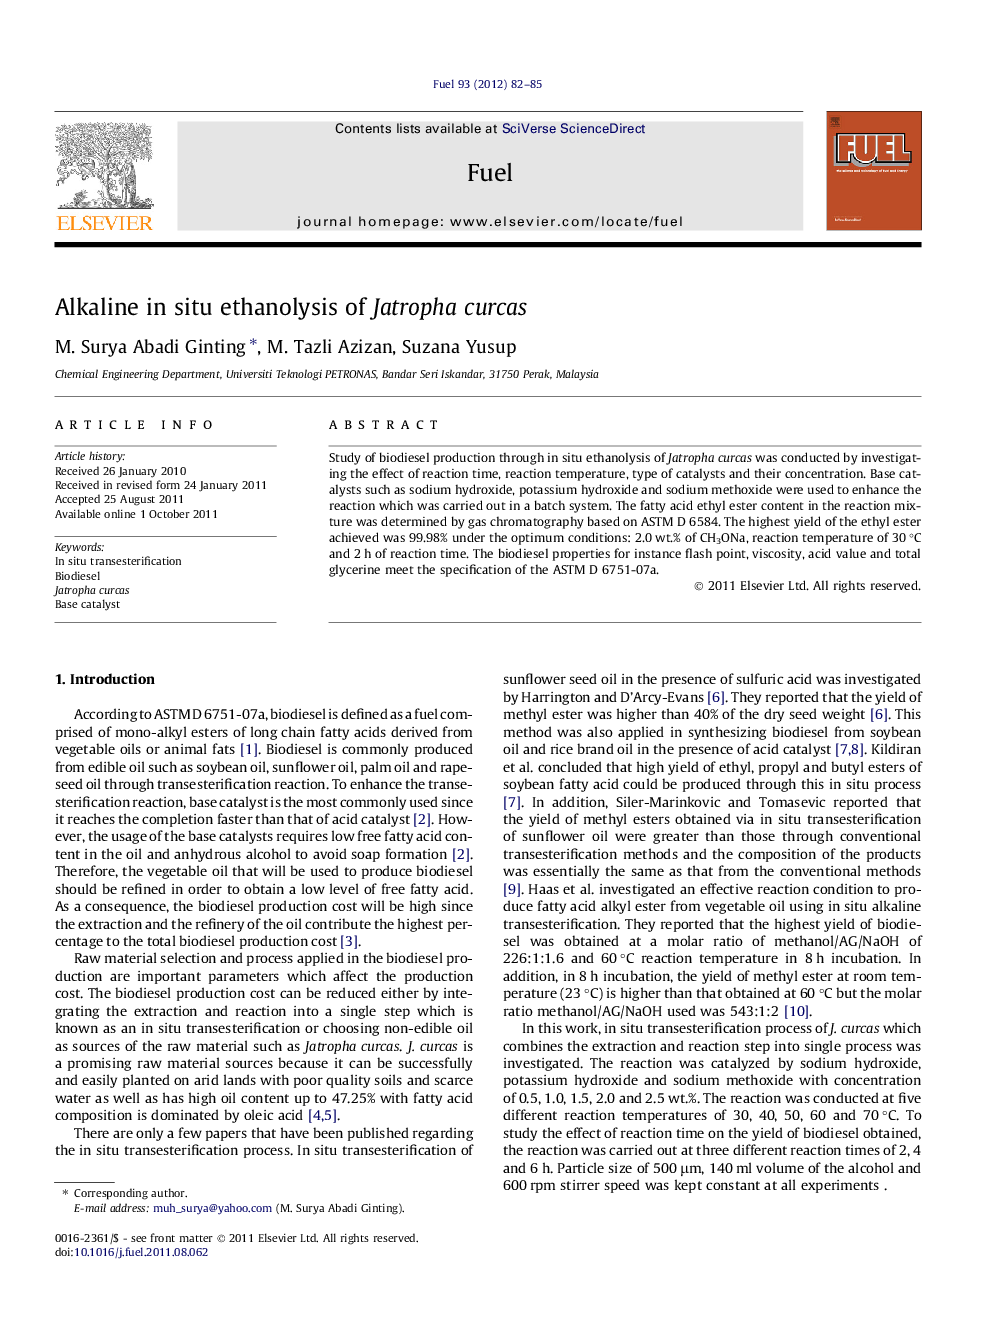 Alkaline in situ ethanolysis of Jatropha curcas